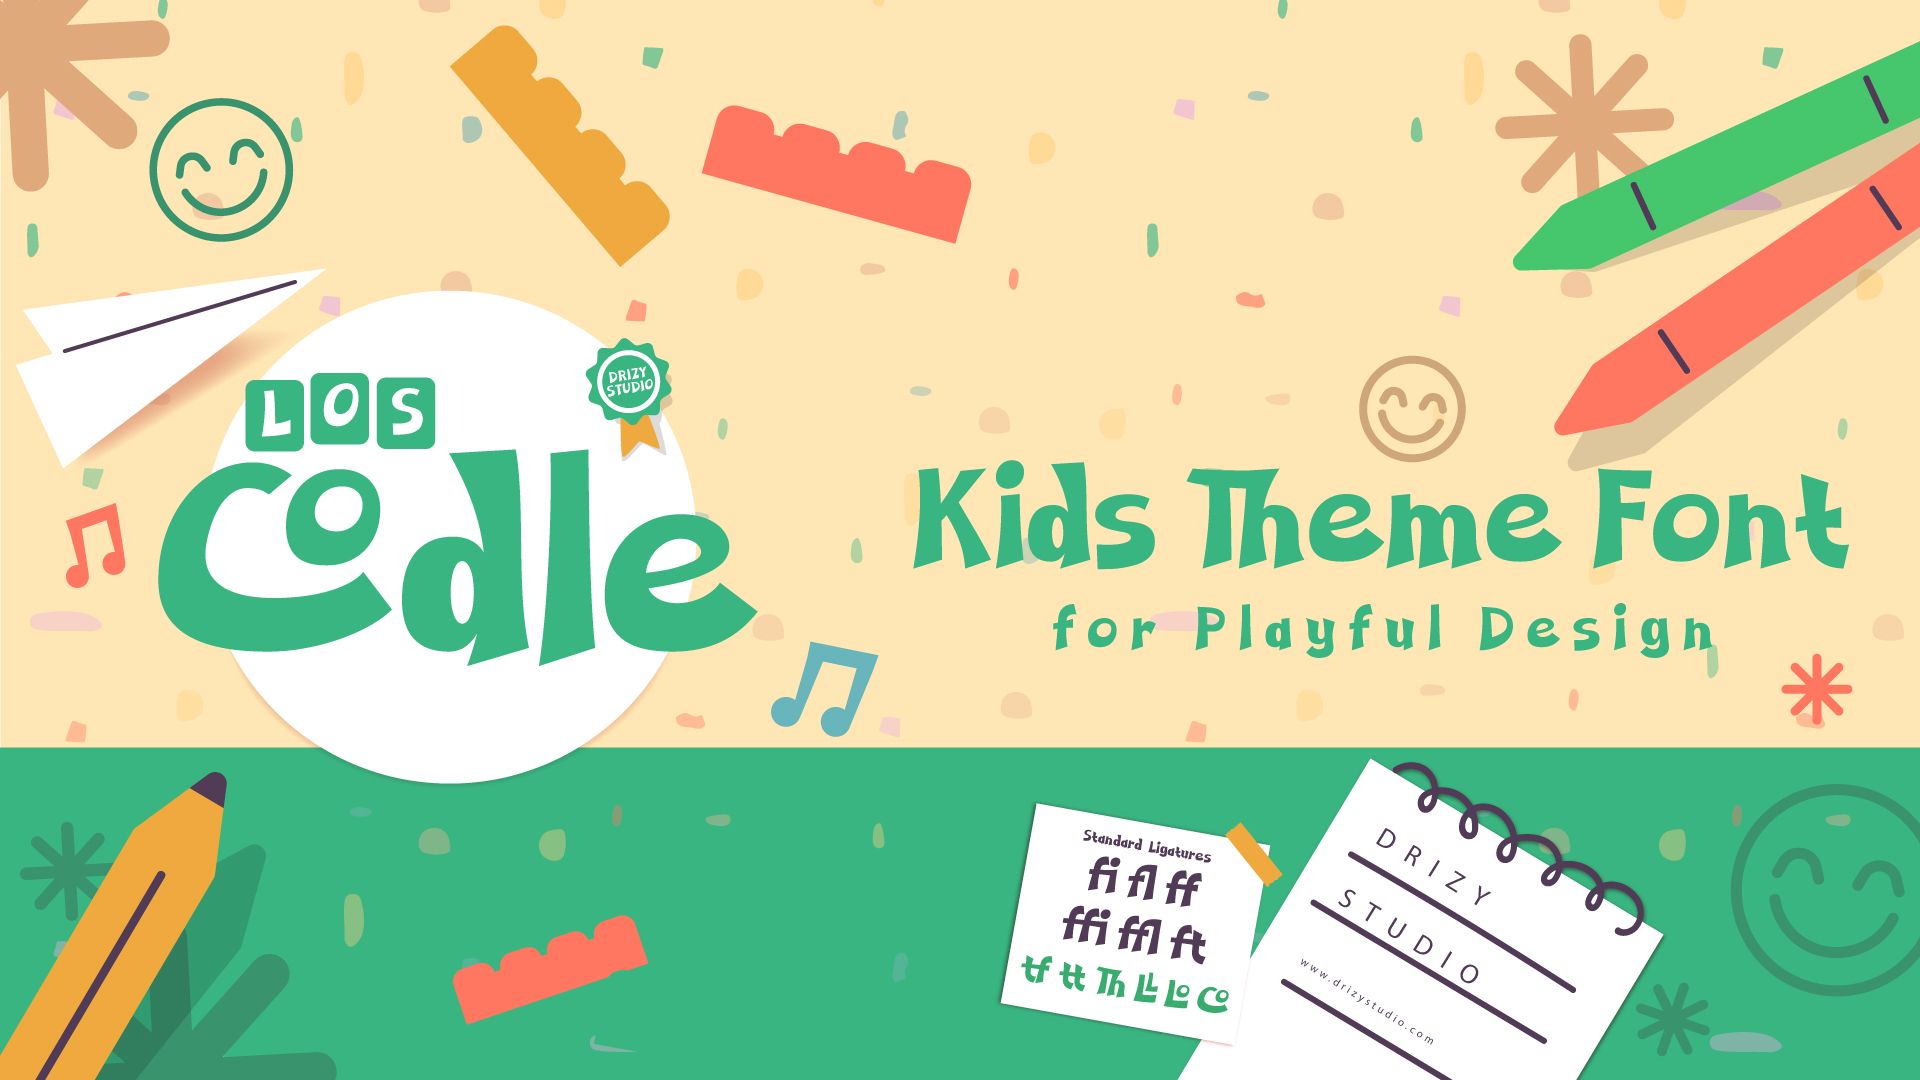 Los Codle Kids Theme Font for Playful Design